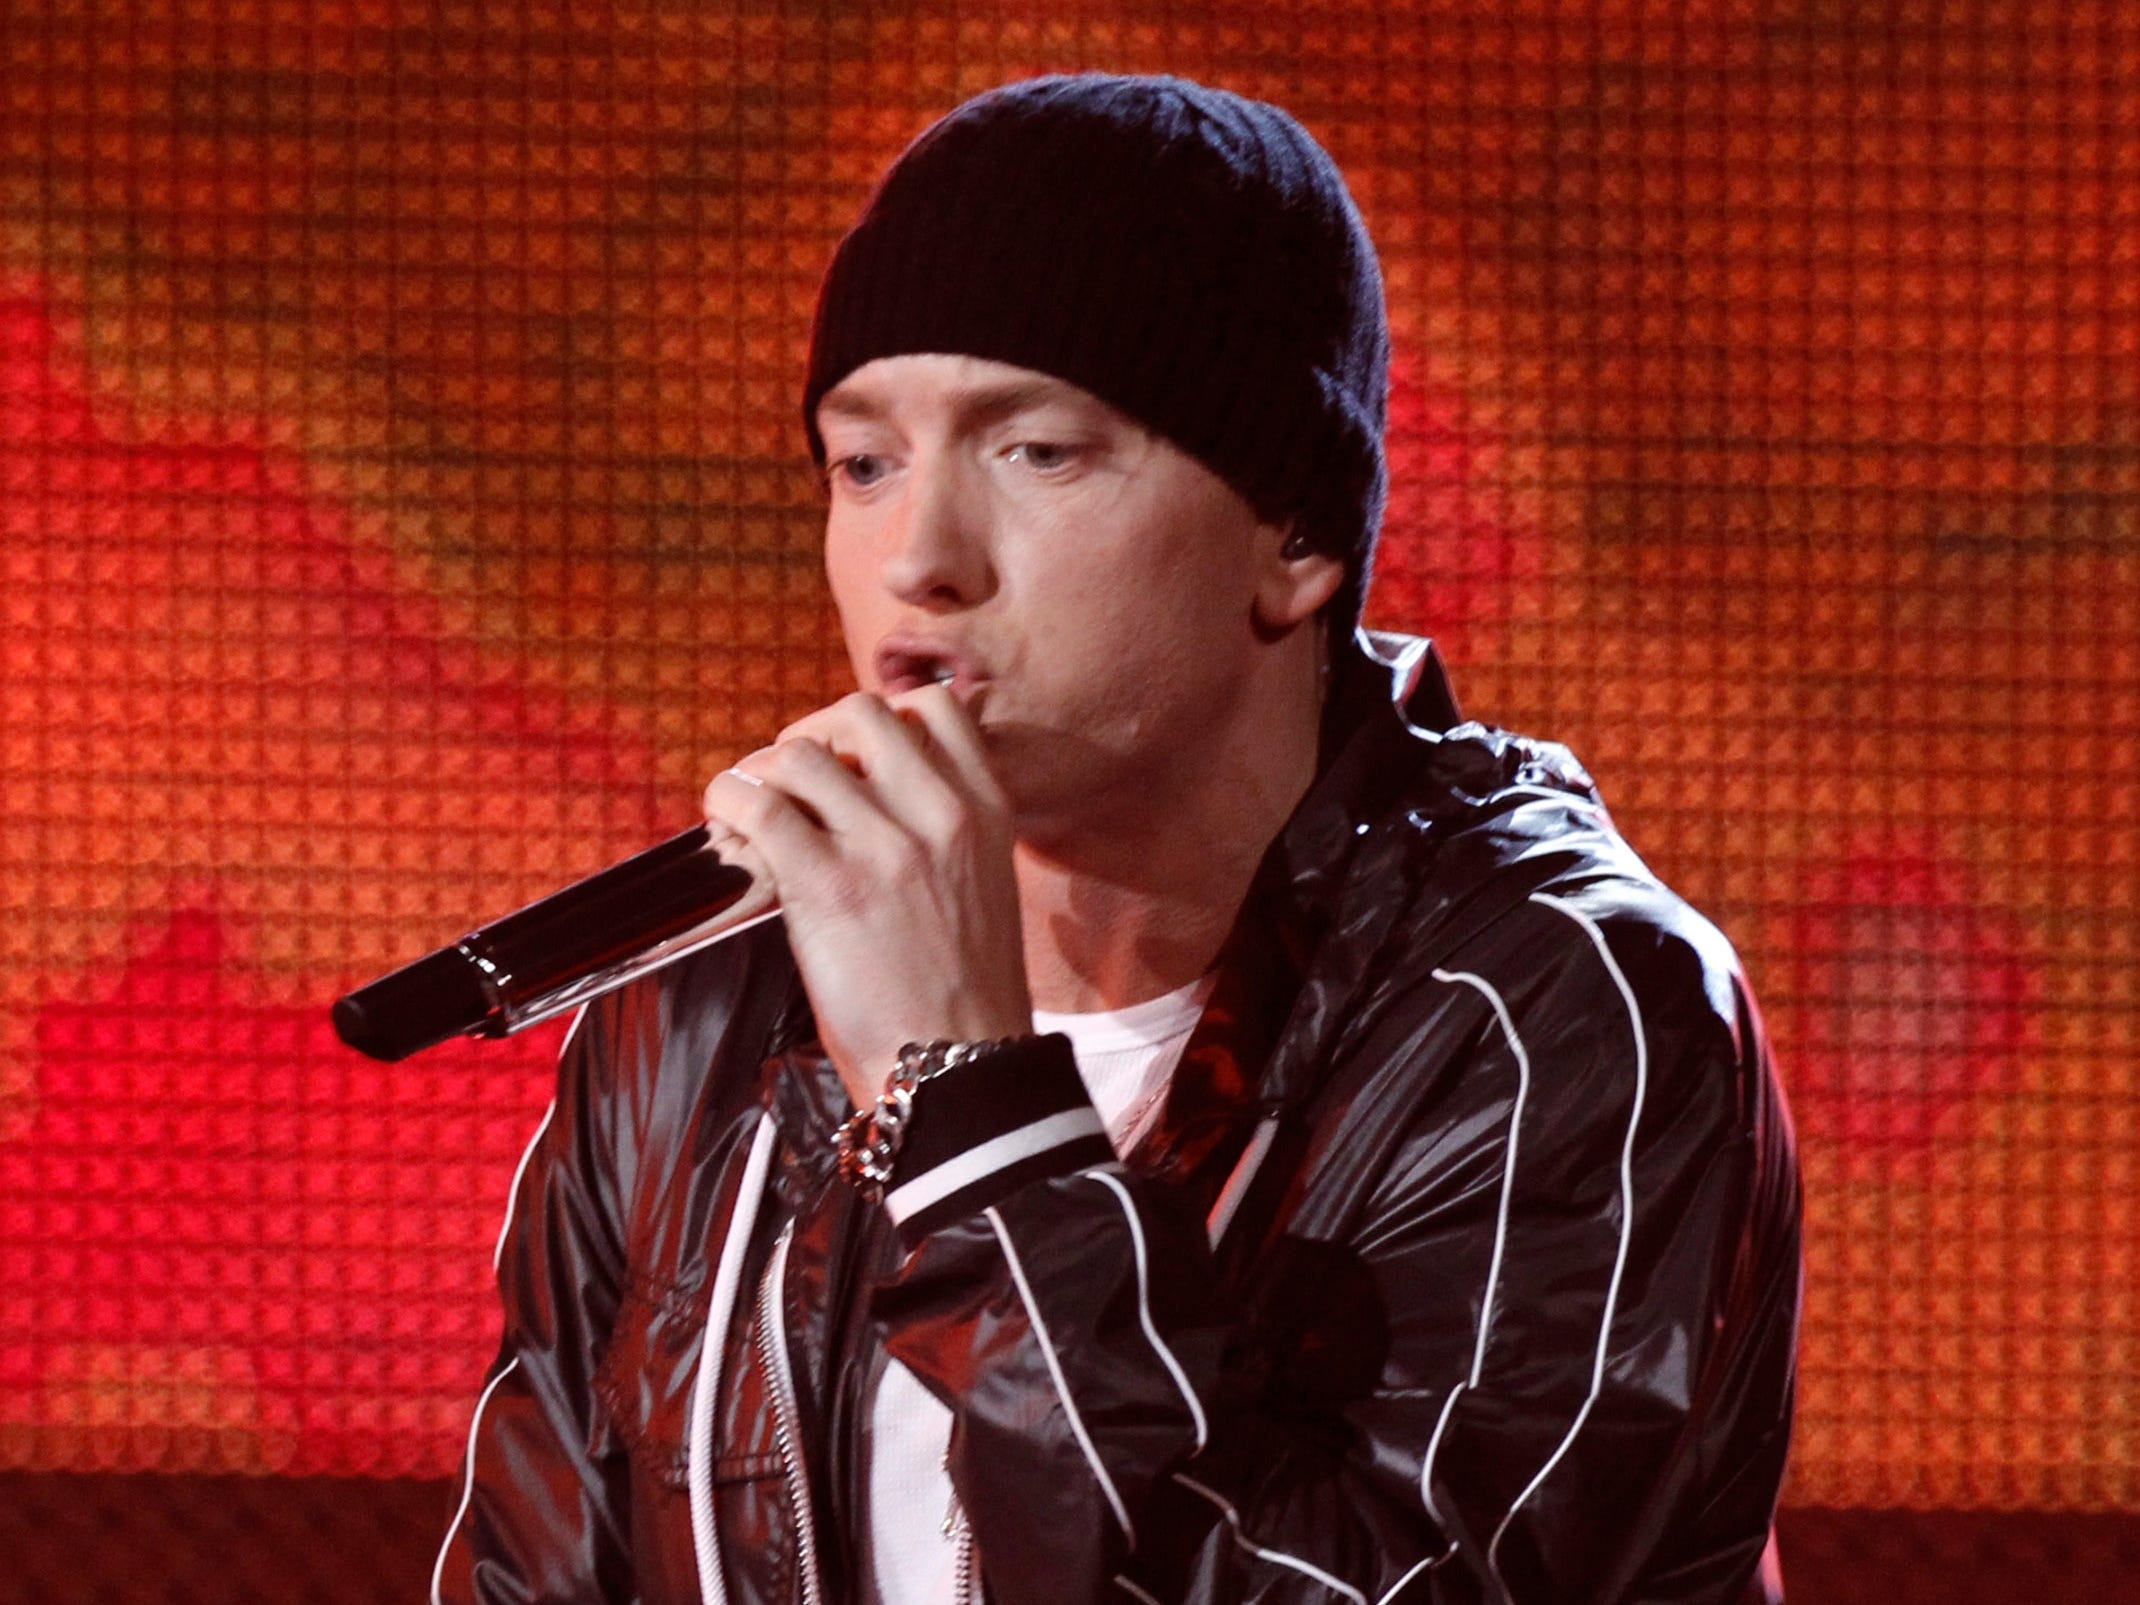 Rapper Eminem reasserts his core values